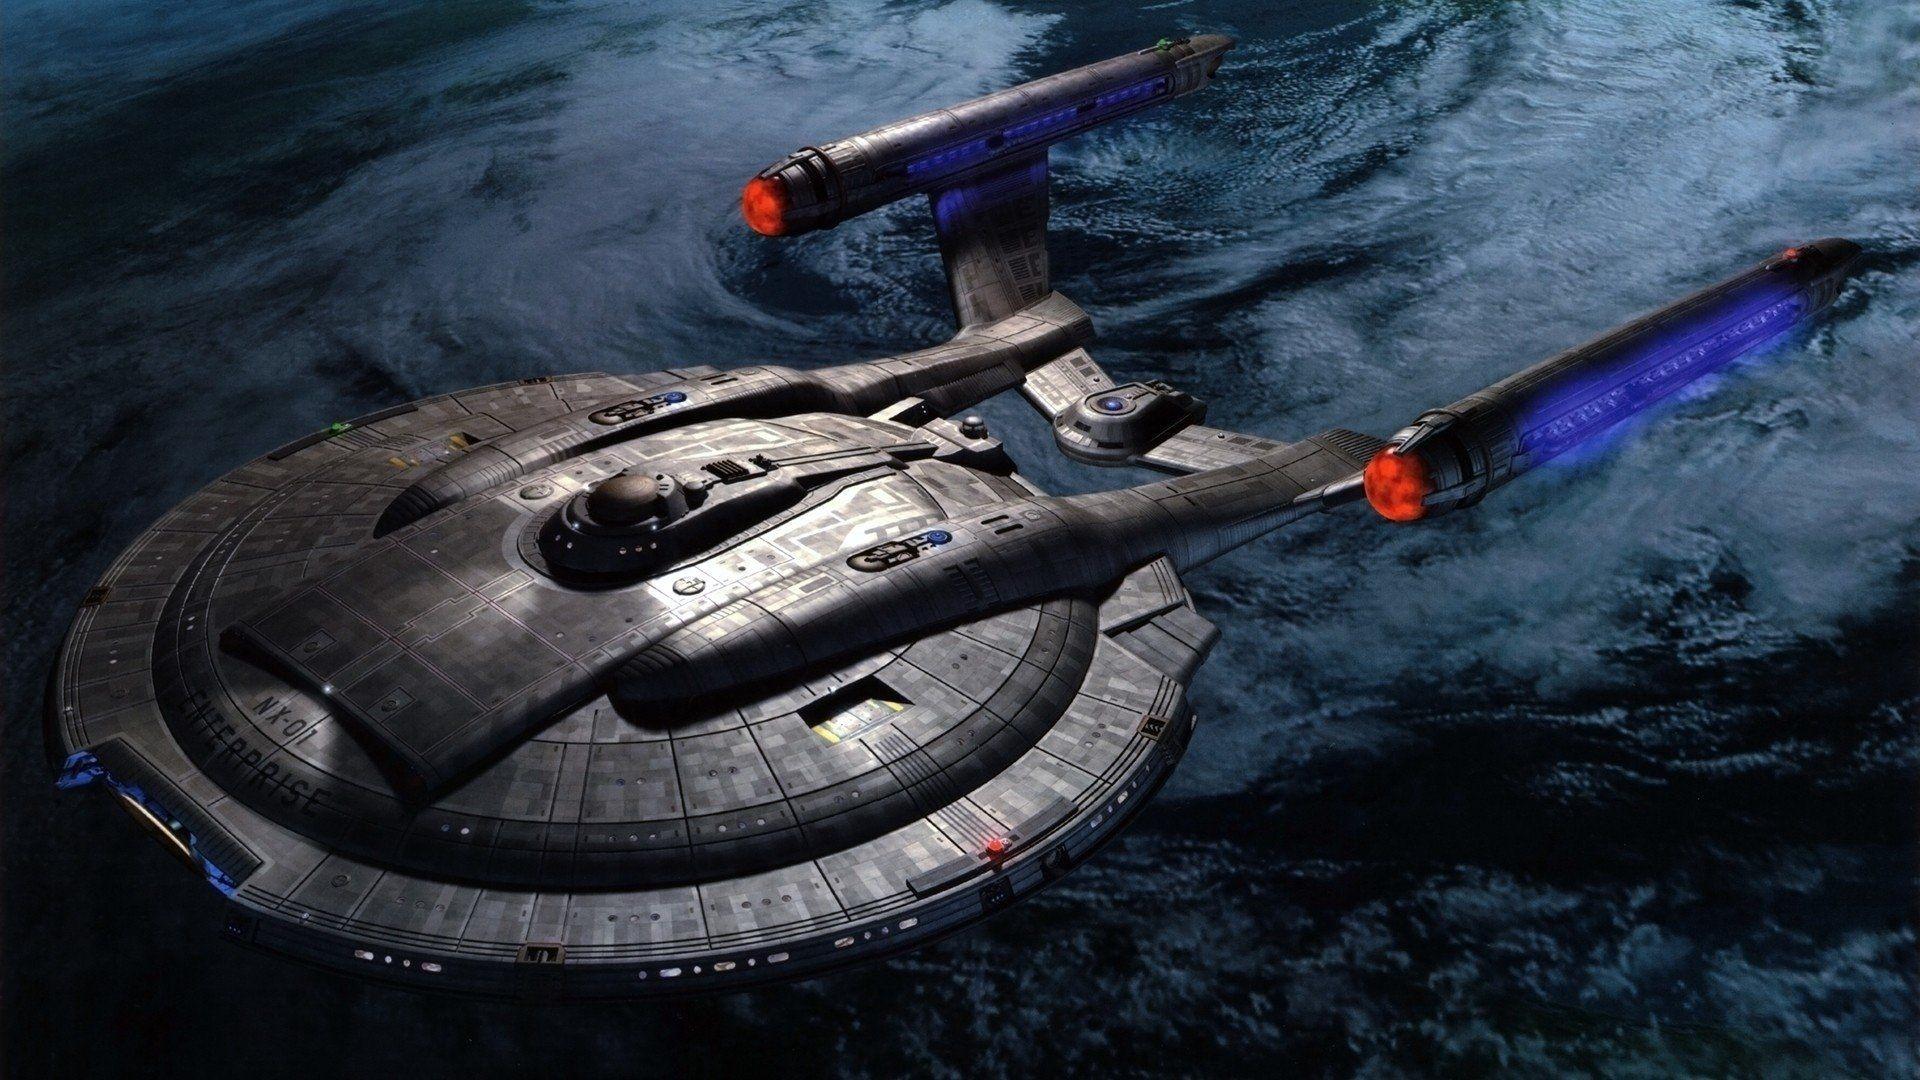 Star Trek Enterprise Wallpaper background picture